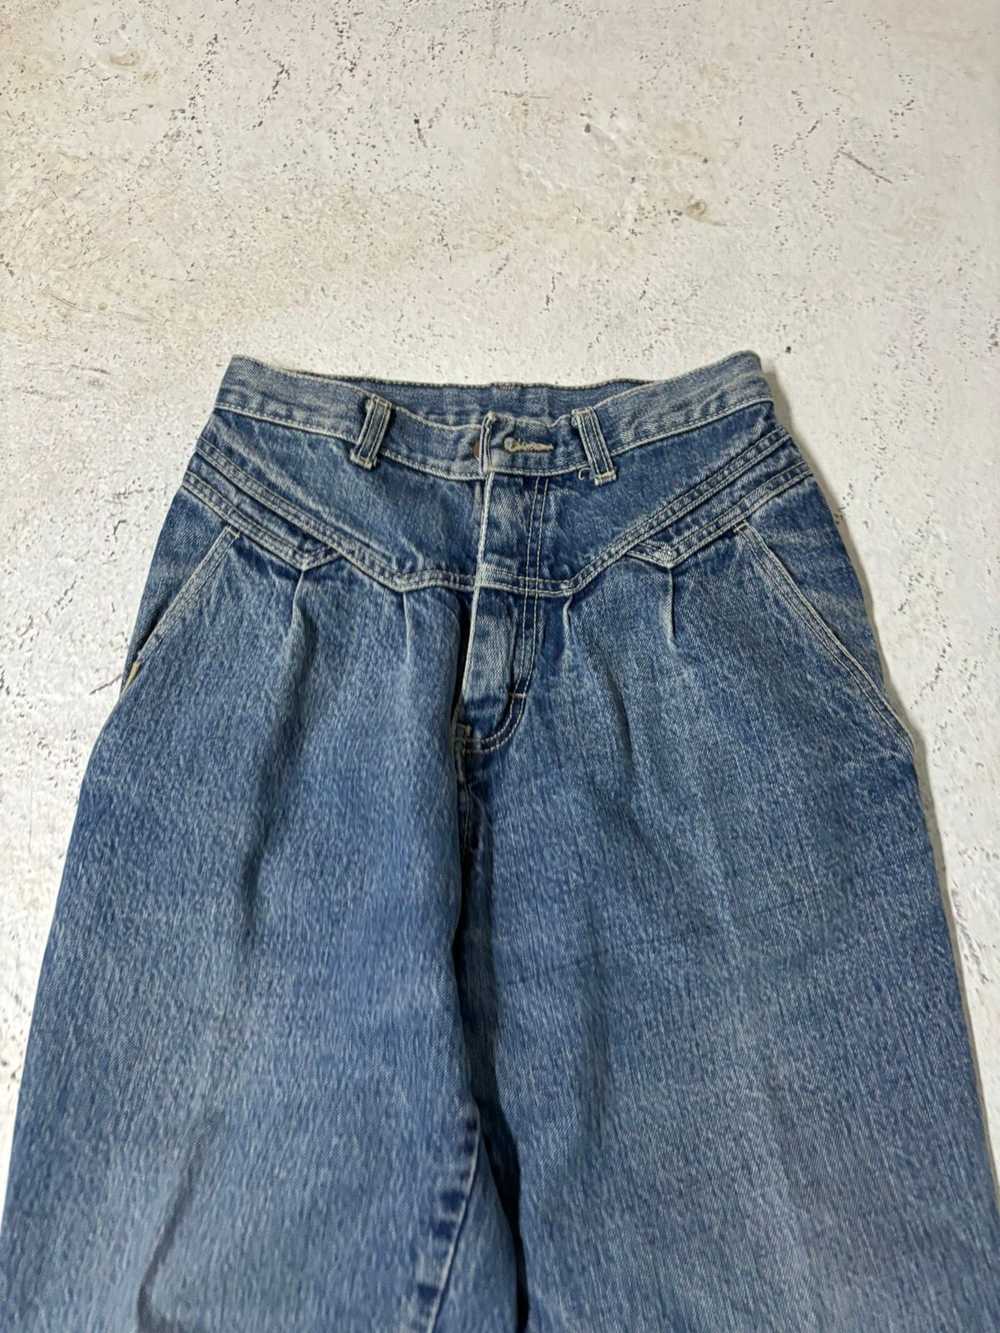 Vintage Vintage 90s gitano jeans - image 4